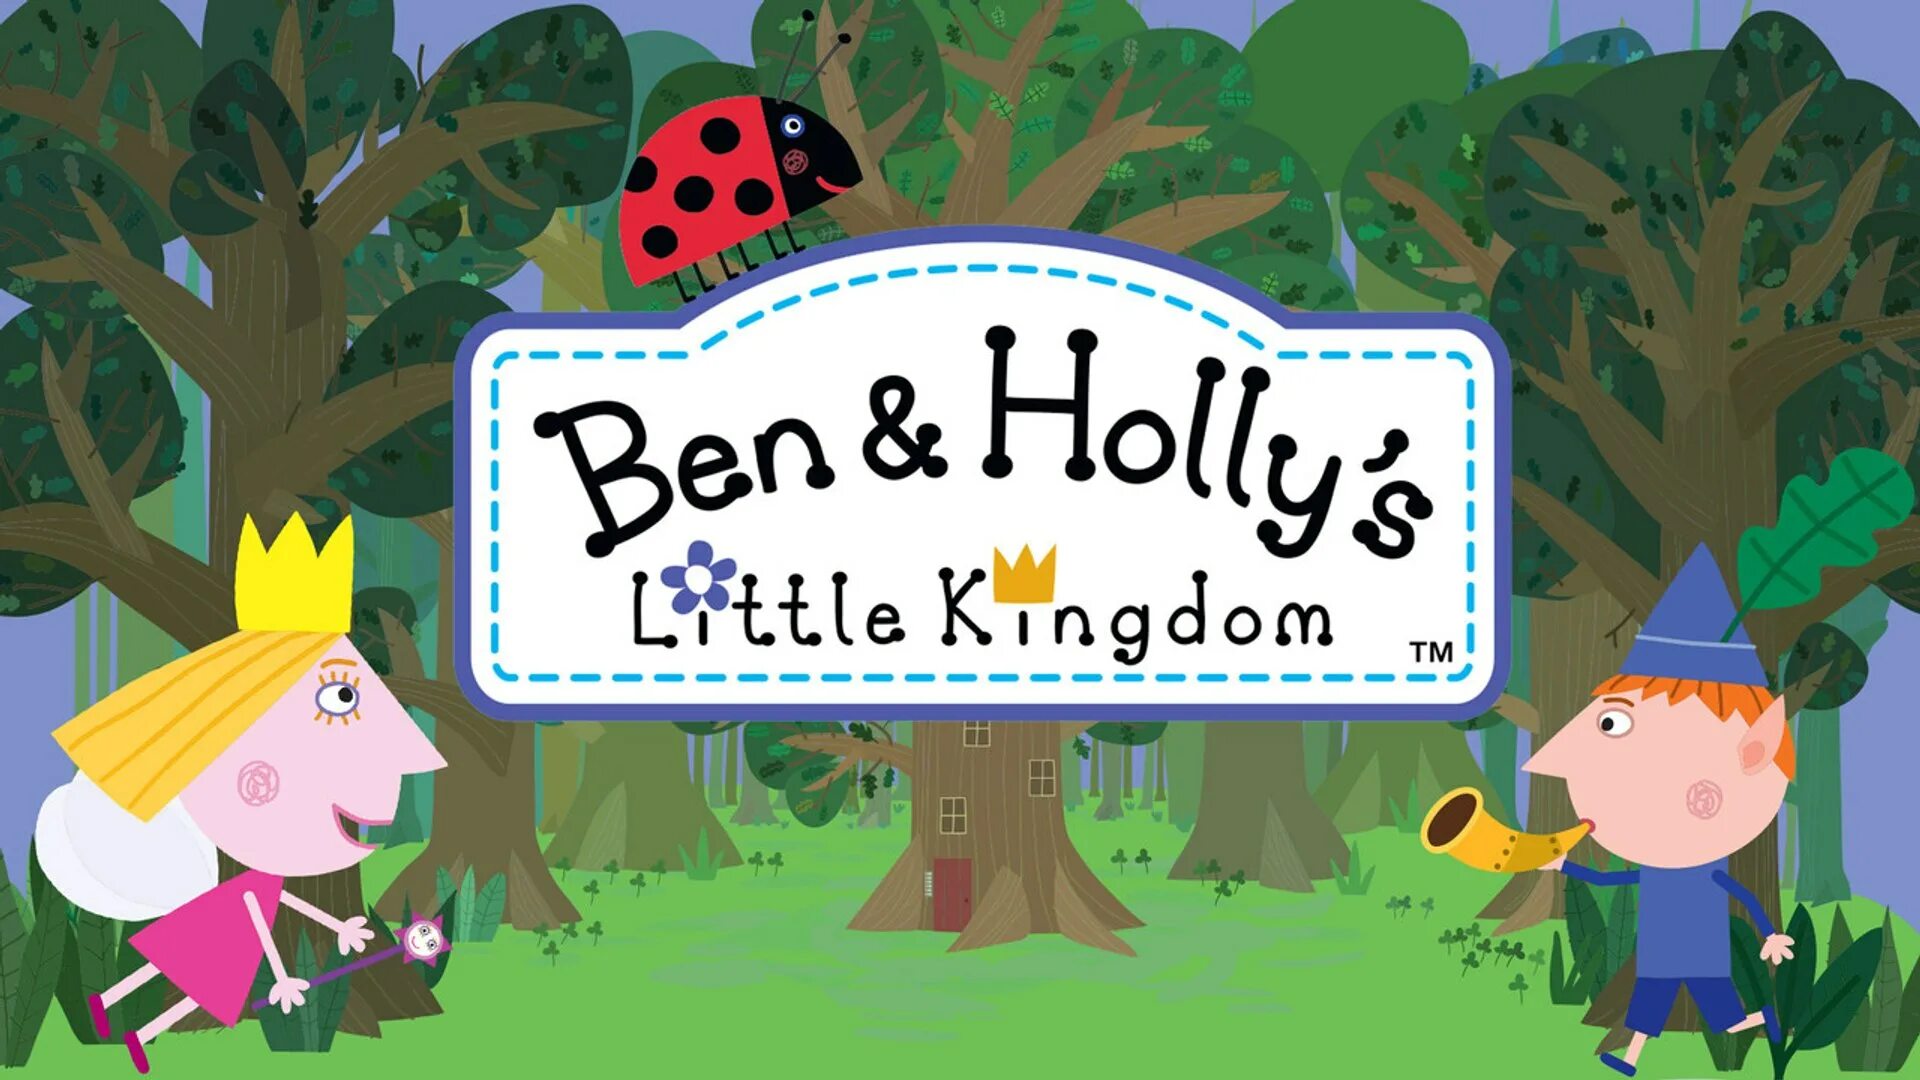 Игра бен и холли. Бен энд Холли. Бен Холли , с Литтле кингдом. Ben and Holly's little Kingdom. Бен и Холли логотип.